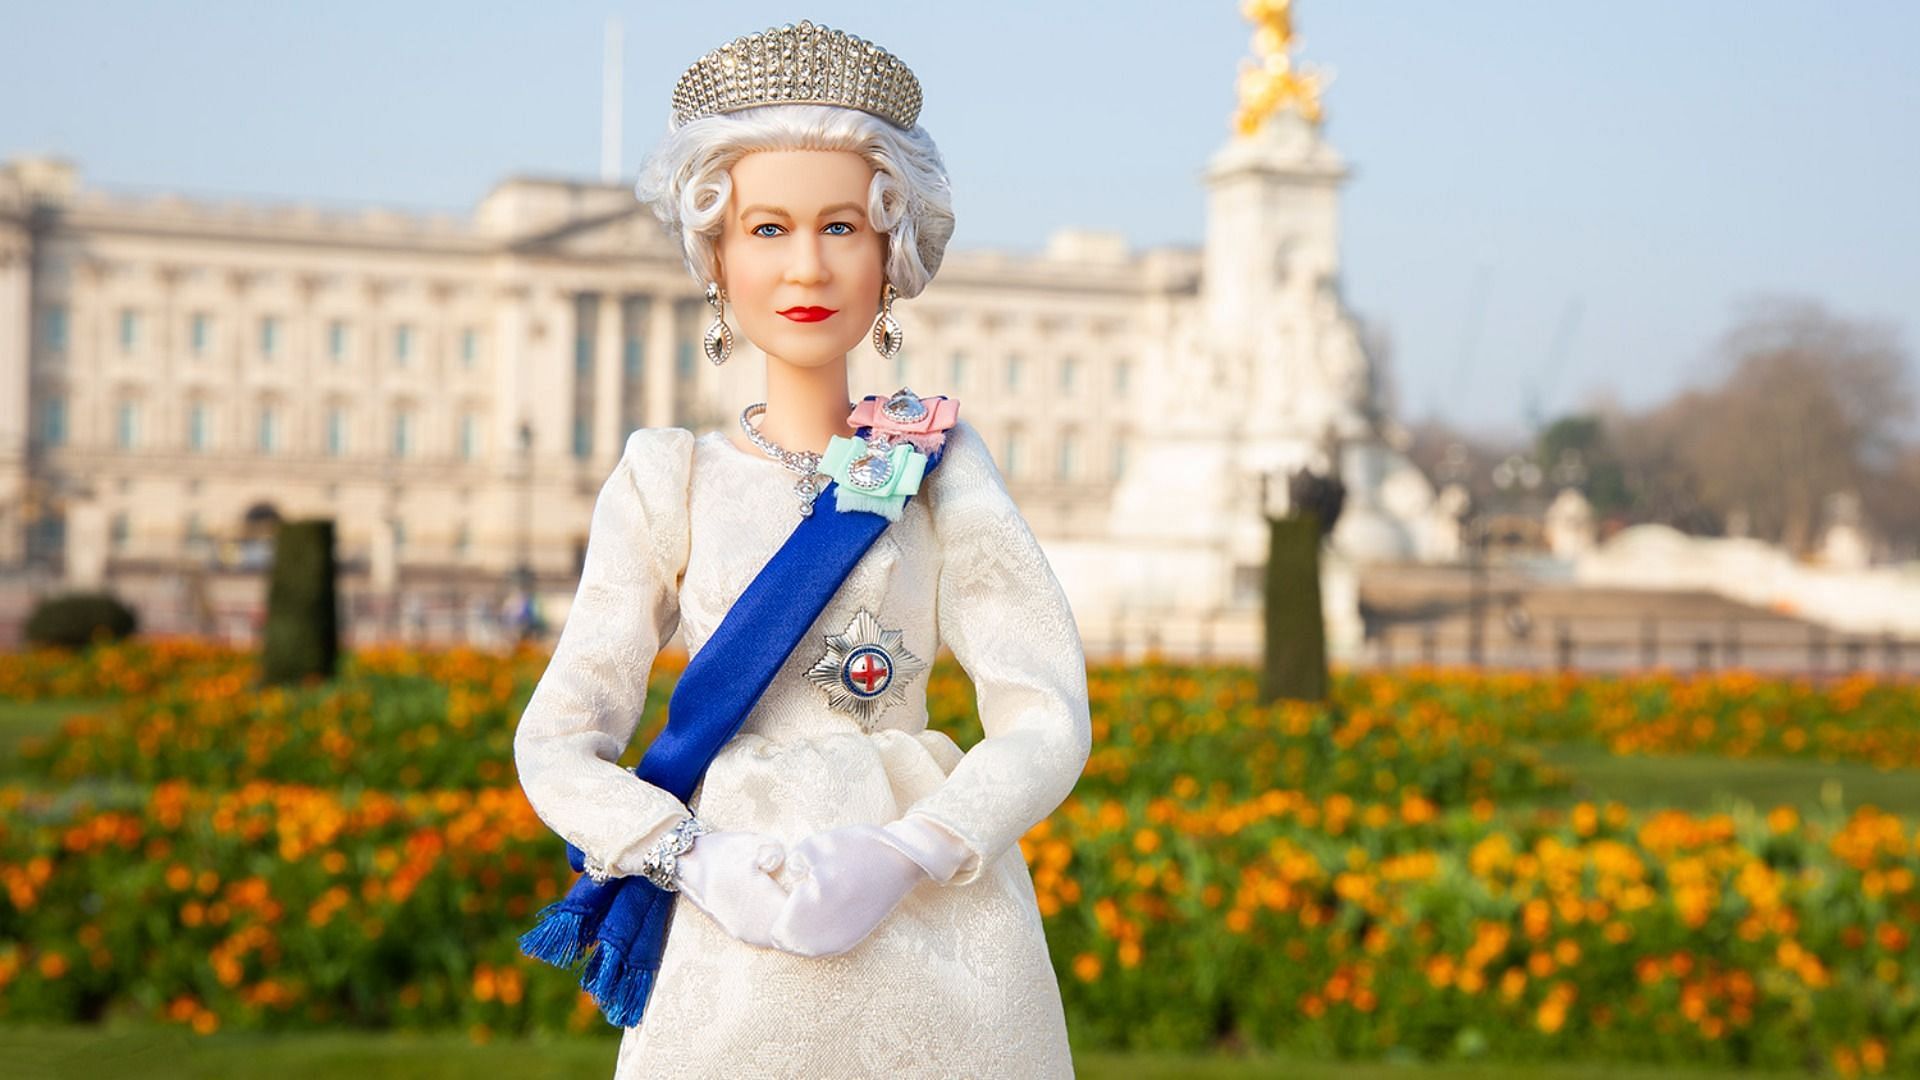 Queen Elizabeth II will turn 96 this year. (Image via Mattel)